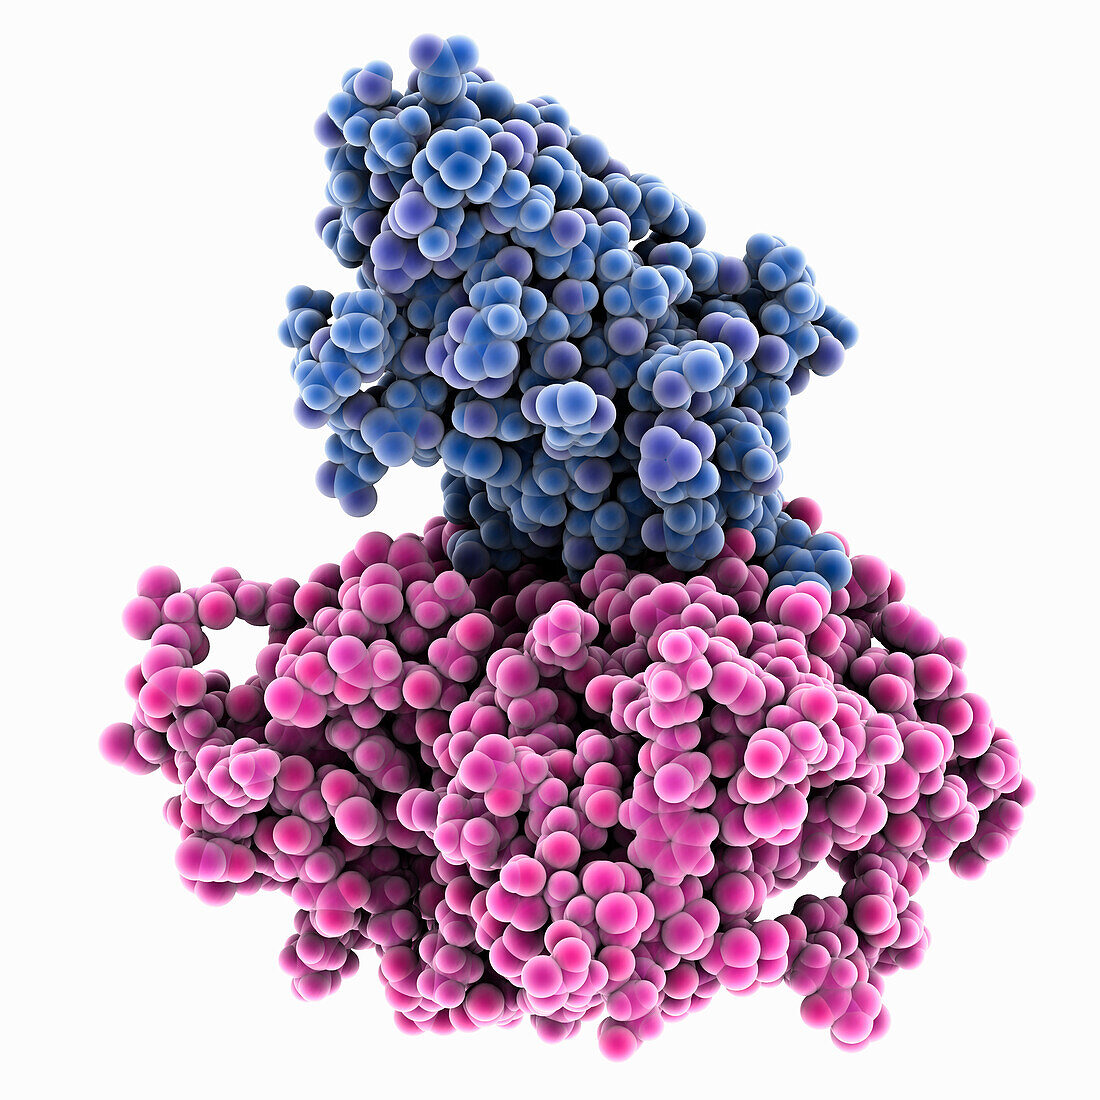 Llama antibody complexed with HIV-1 gp120, molecular model